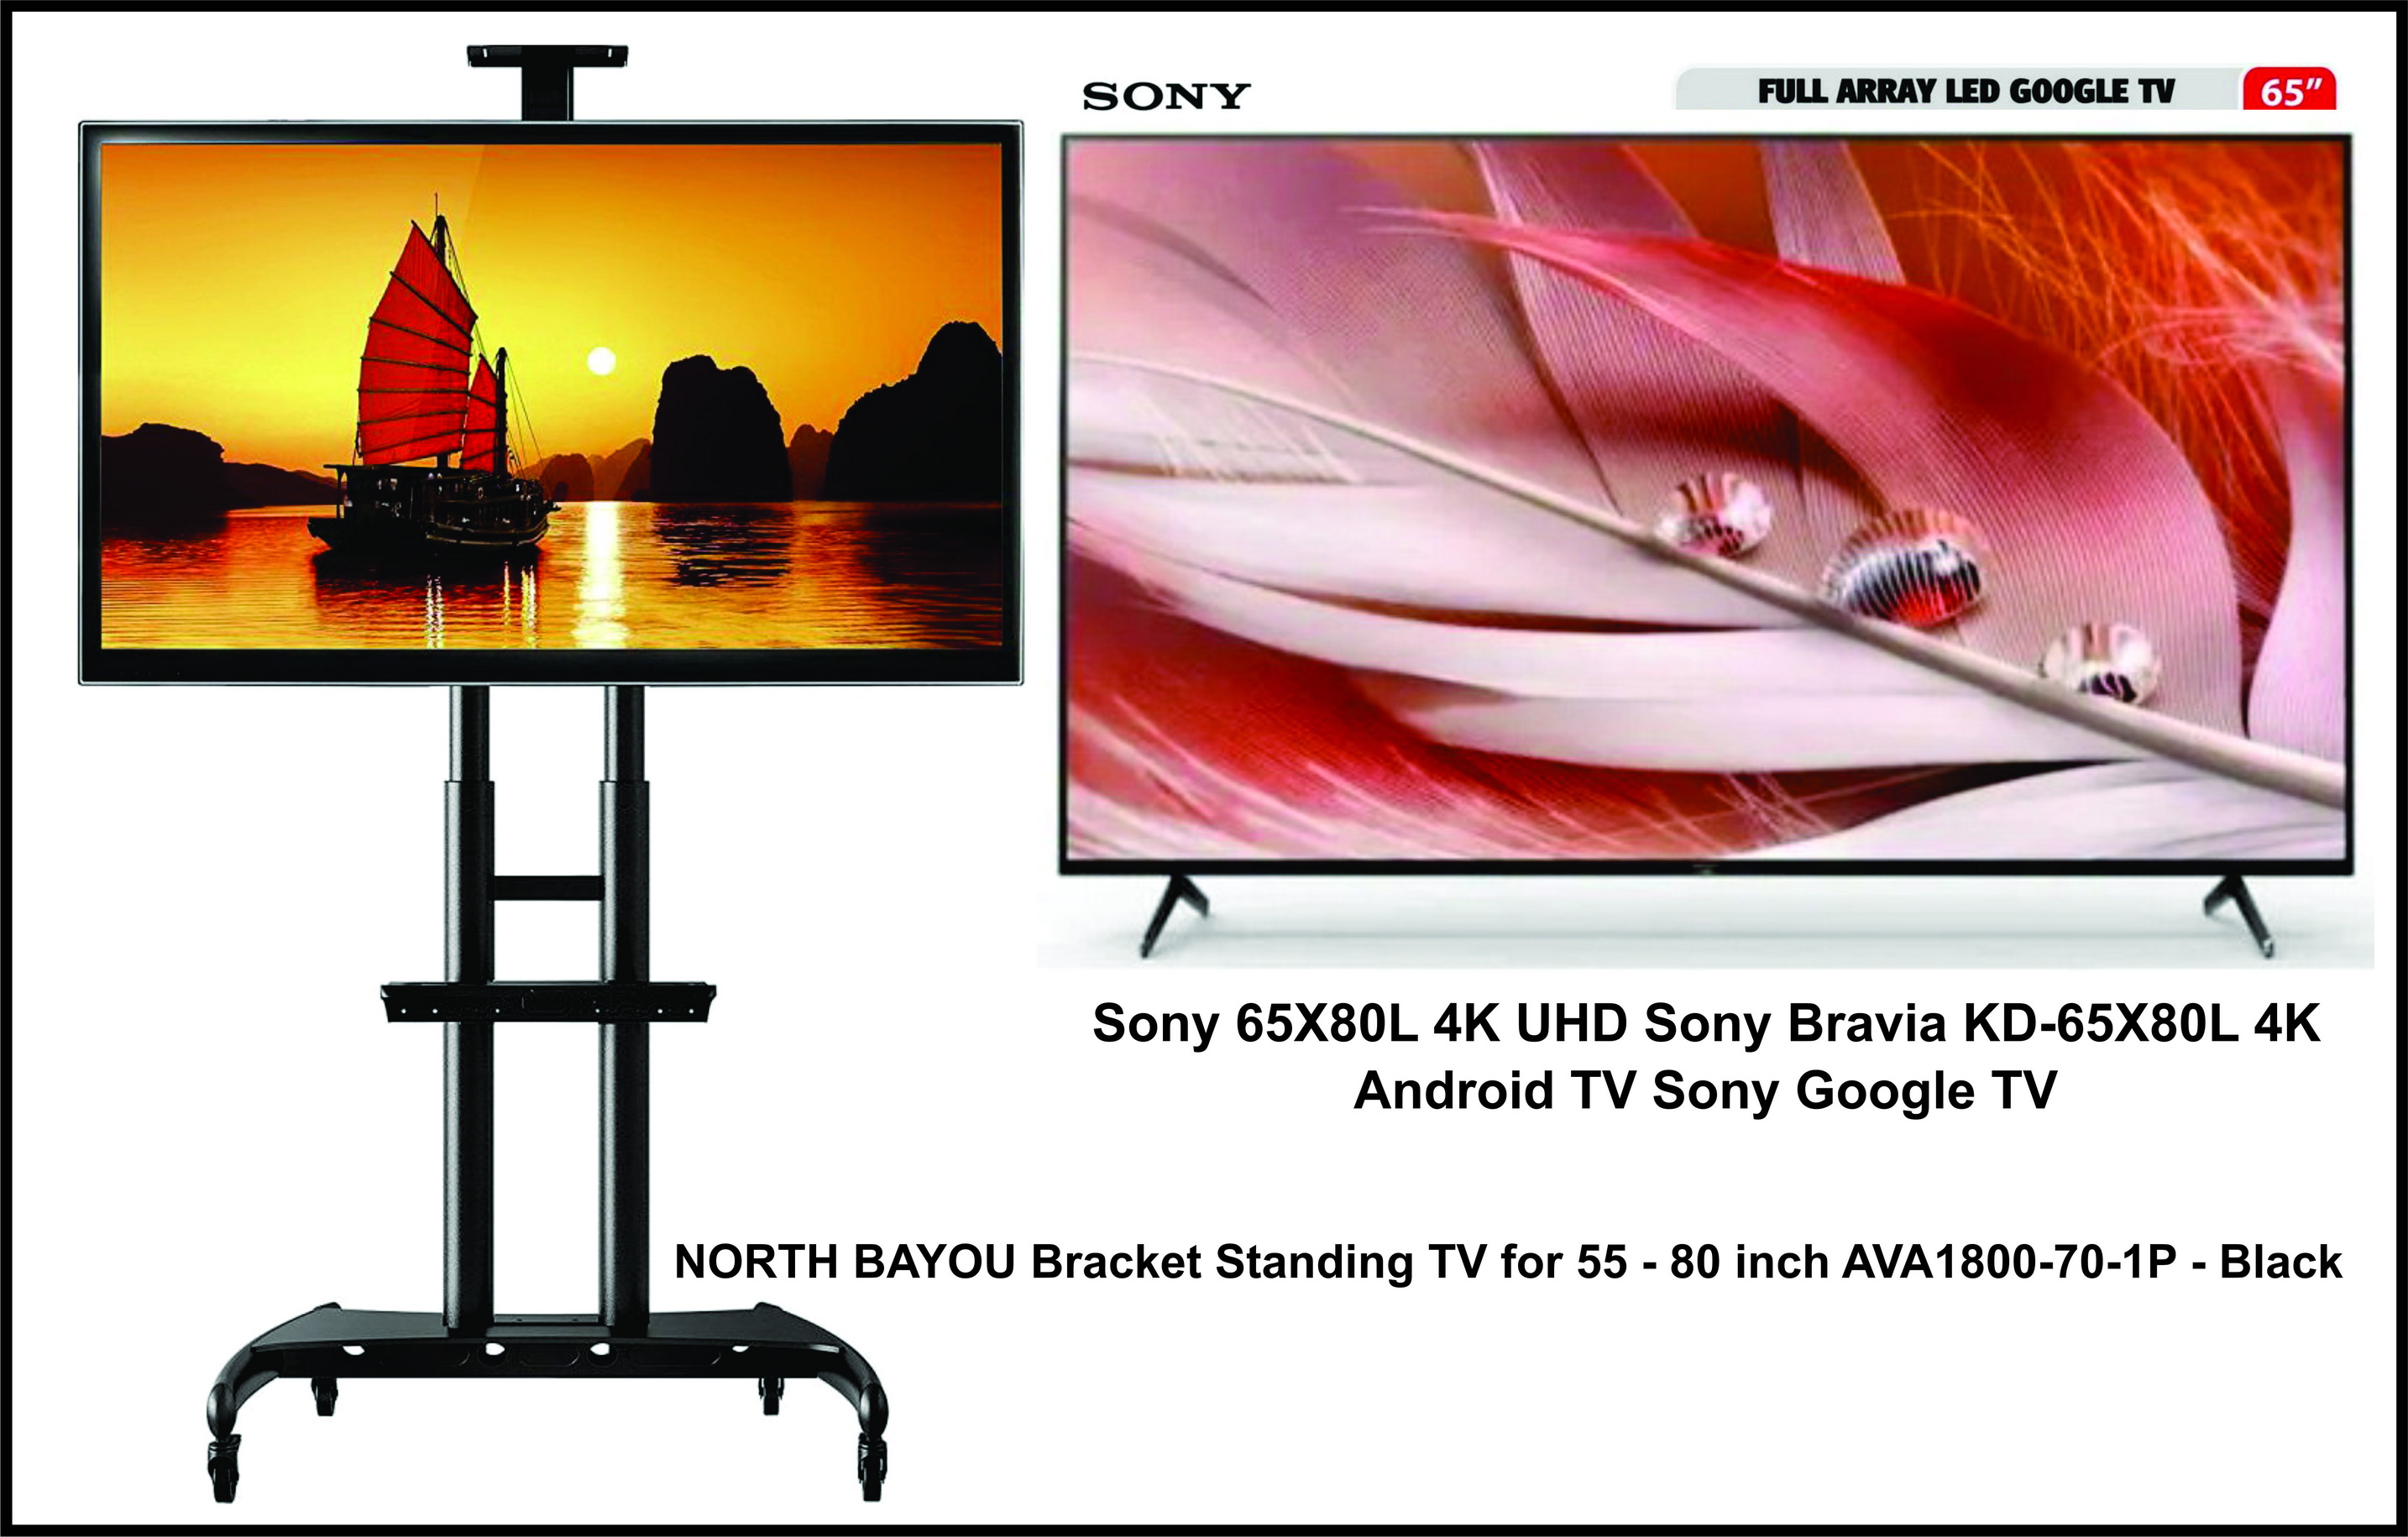 Sony 65X80L 4K UHD Sony Bravia KD-65X80L 4K Android TV Sony Google TV dan NORTH BAYOU Bracket Standing TV for 55 - 80 inch AVA1800-70-1P - Black (tanpa pajak ppn)